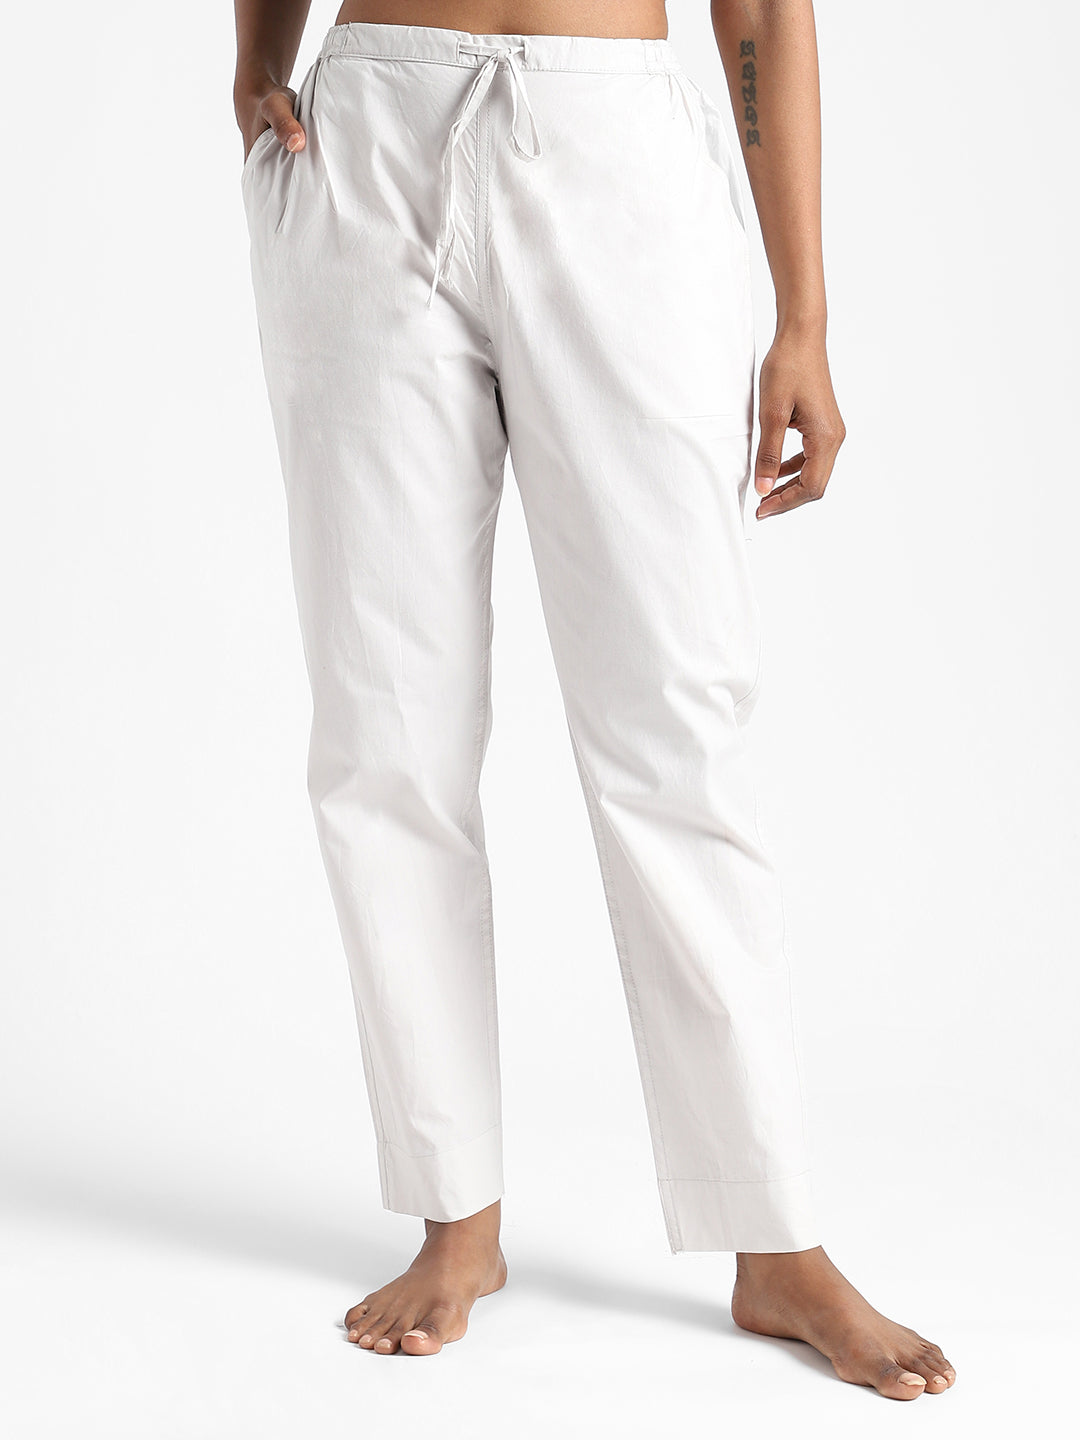 Ash Grey Women's Organic Cotton & Natural Dyed Slim Fit Pants